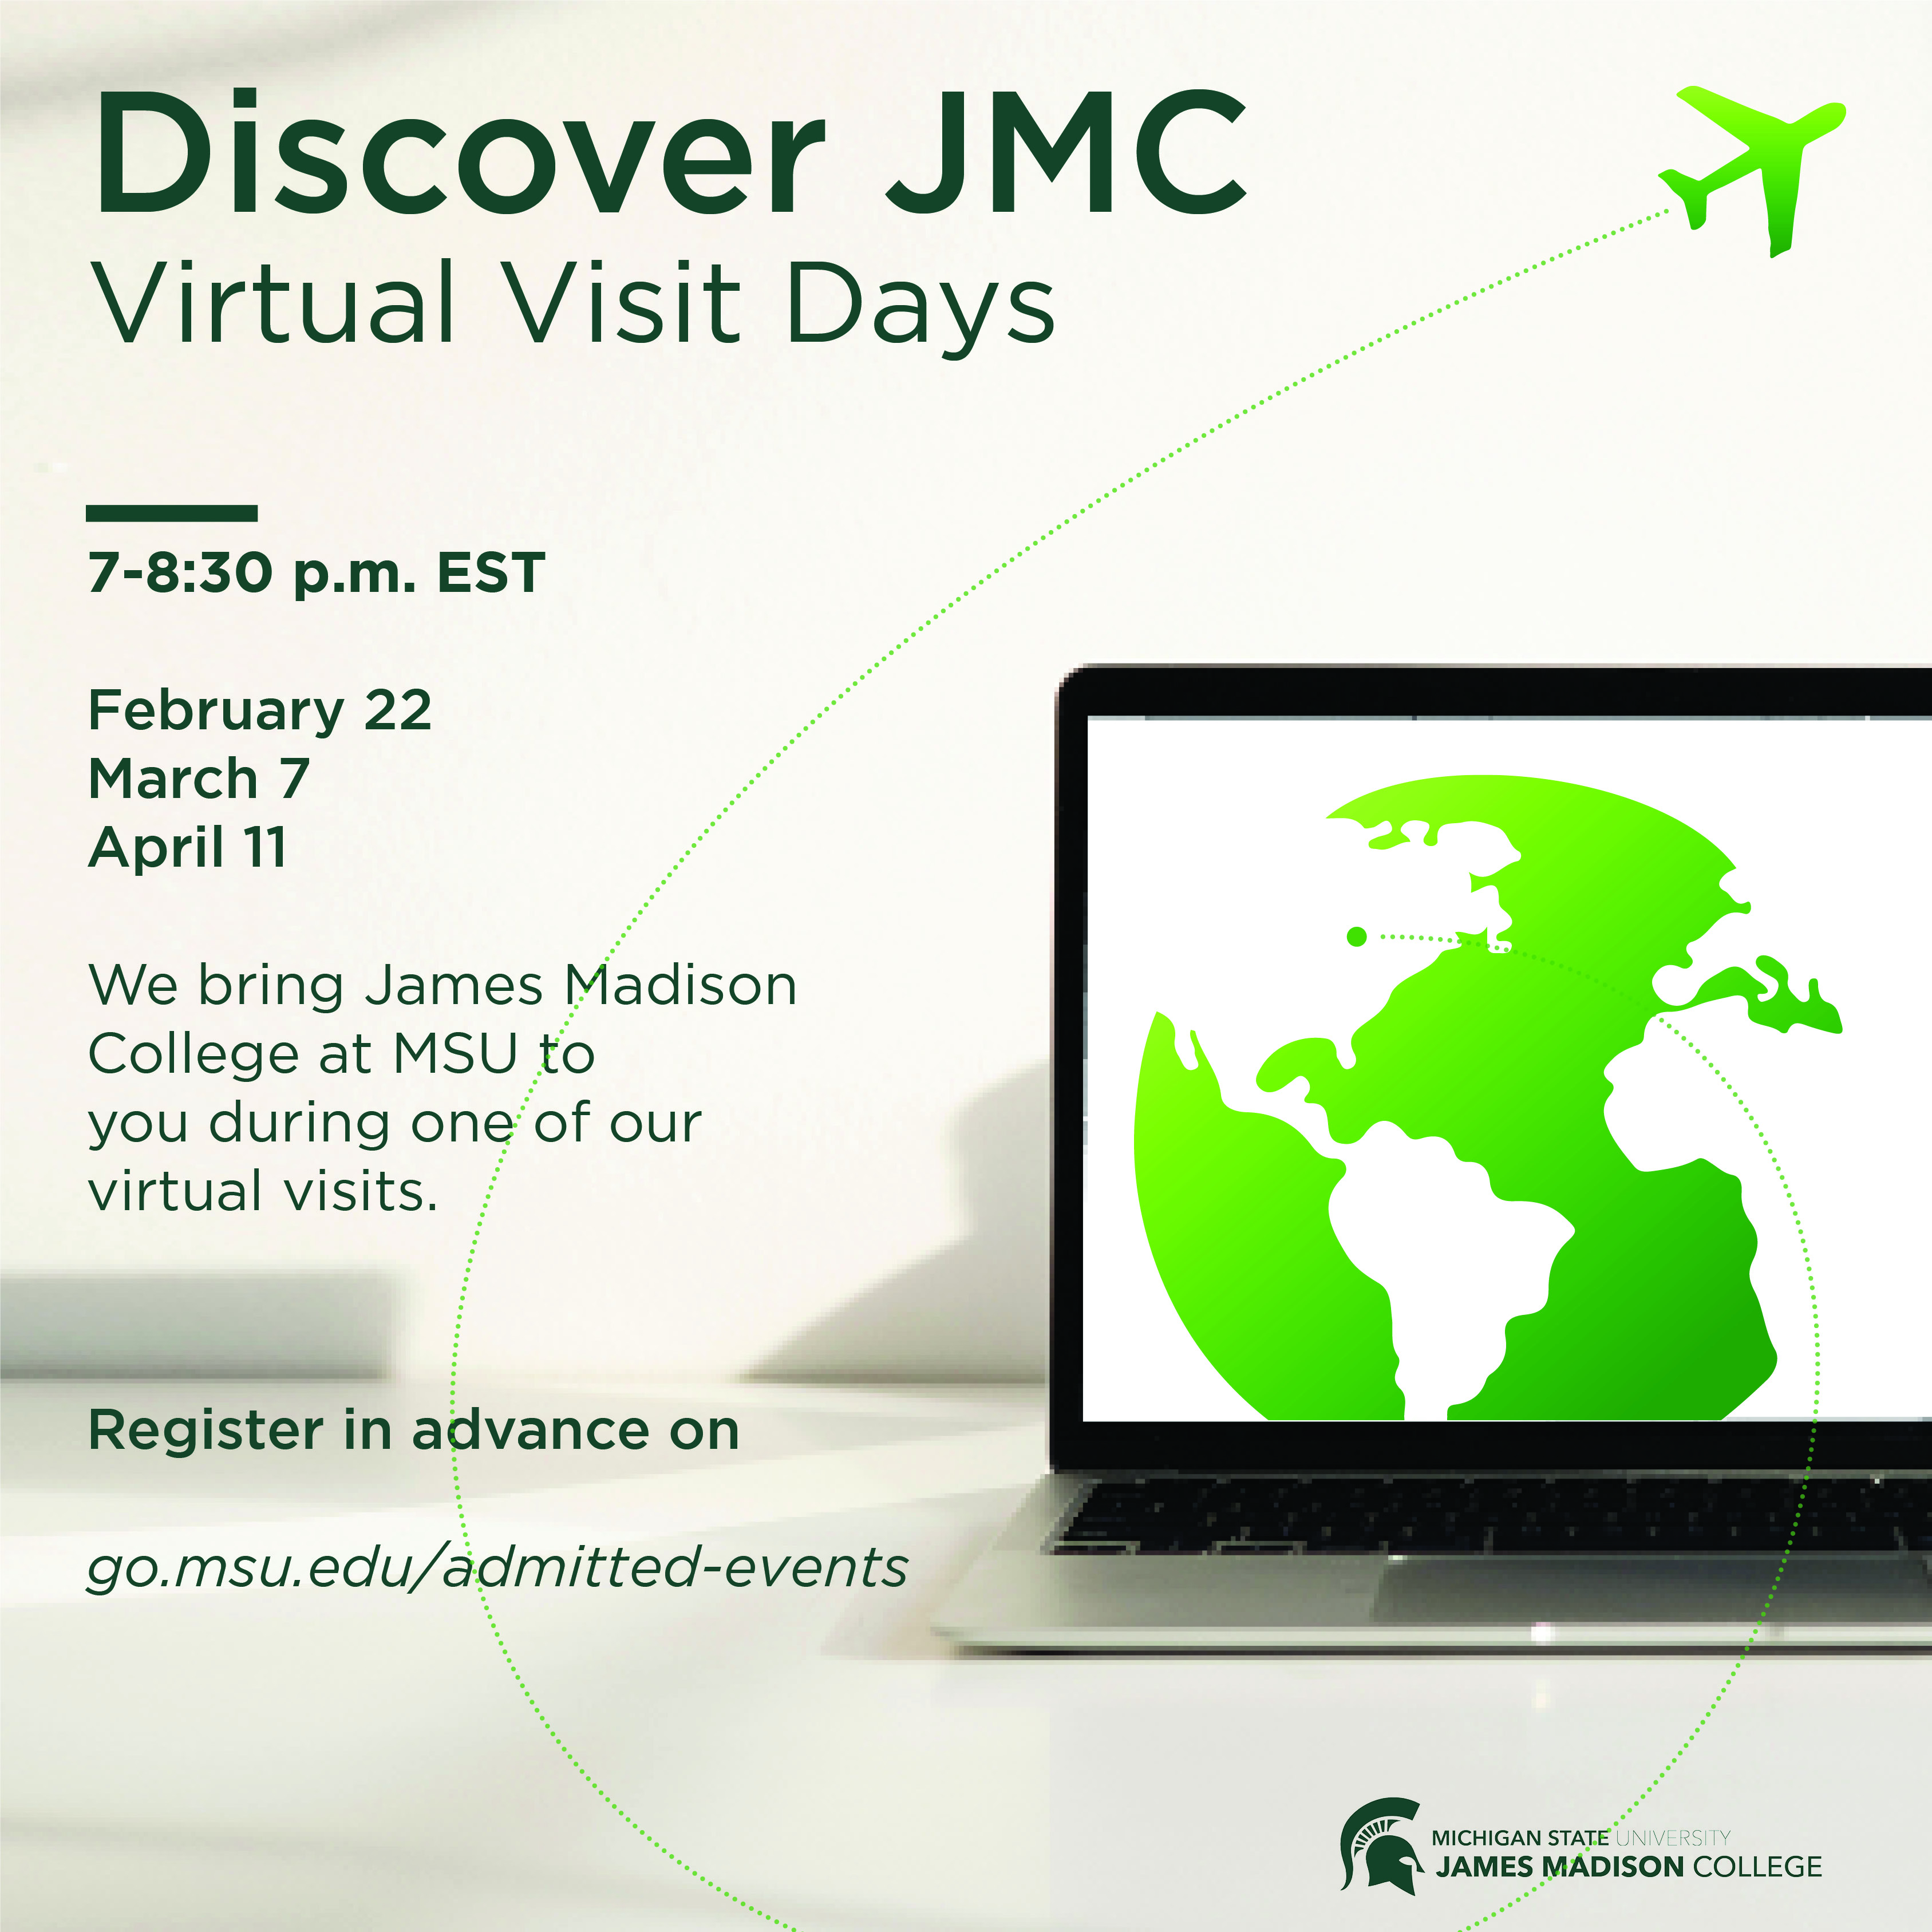 Discover JMC Virtual Visit Days